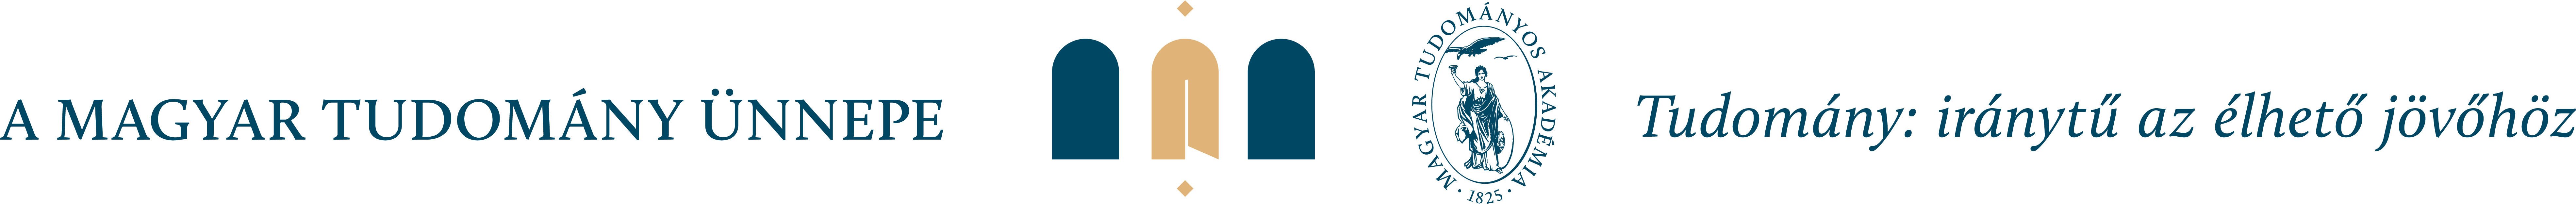 MTÜ 2021 mottó logóval